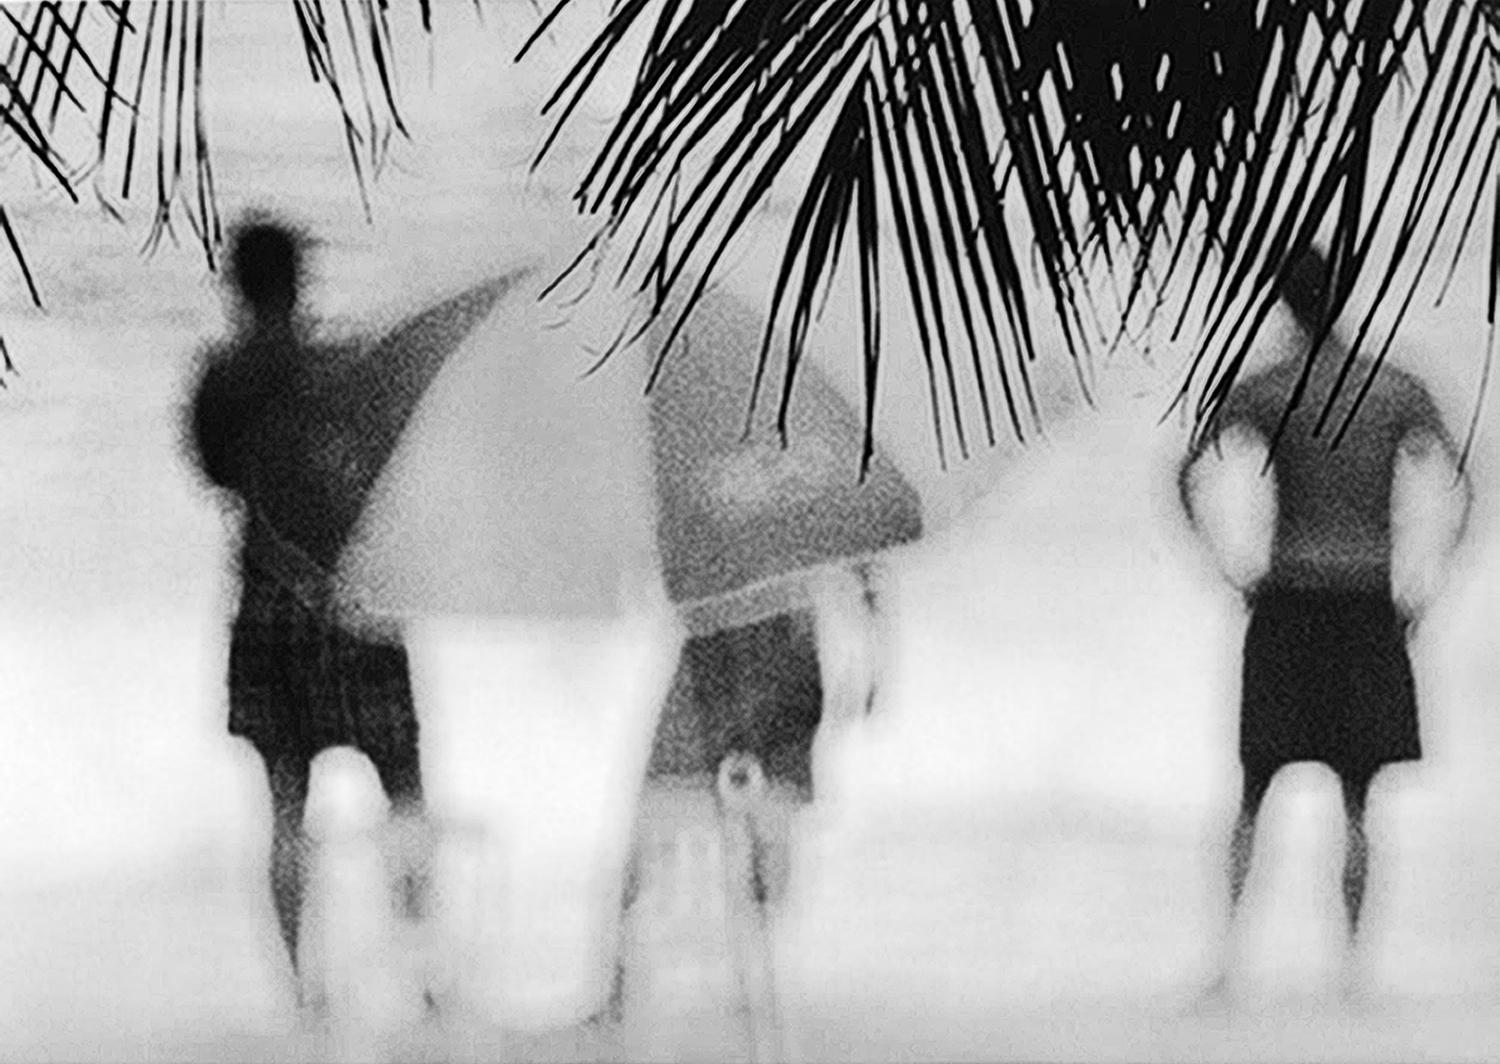 Barnaby Hall Black and White Photograph - Surfistas, Rio de Janiero, Brazil 